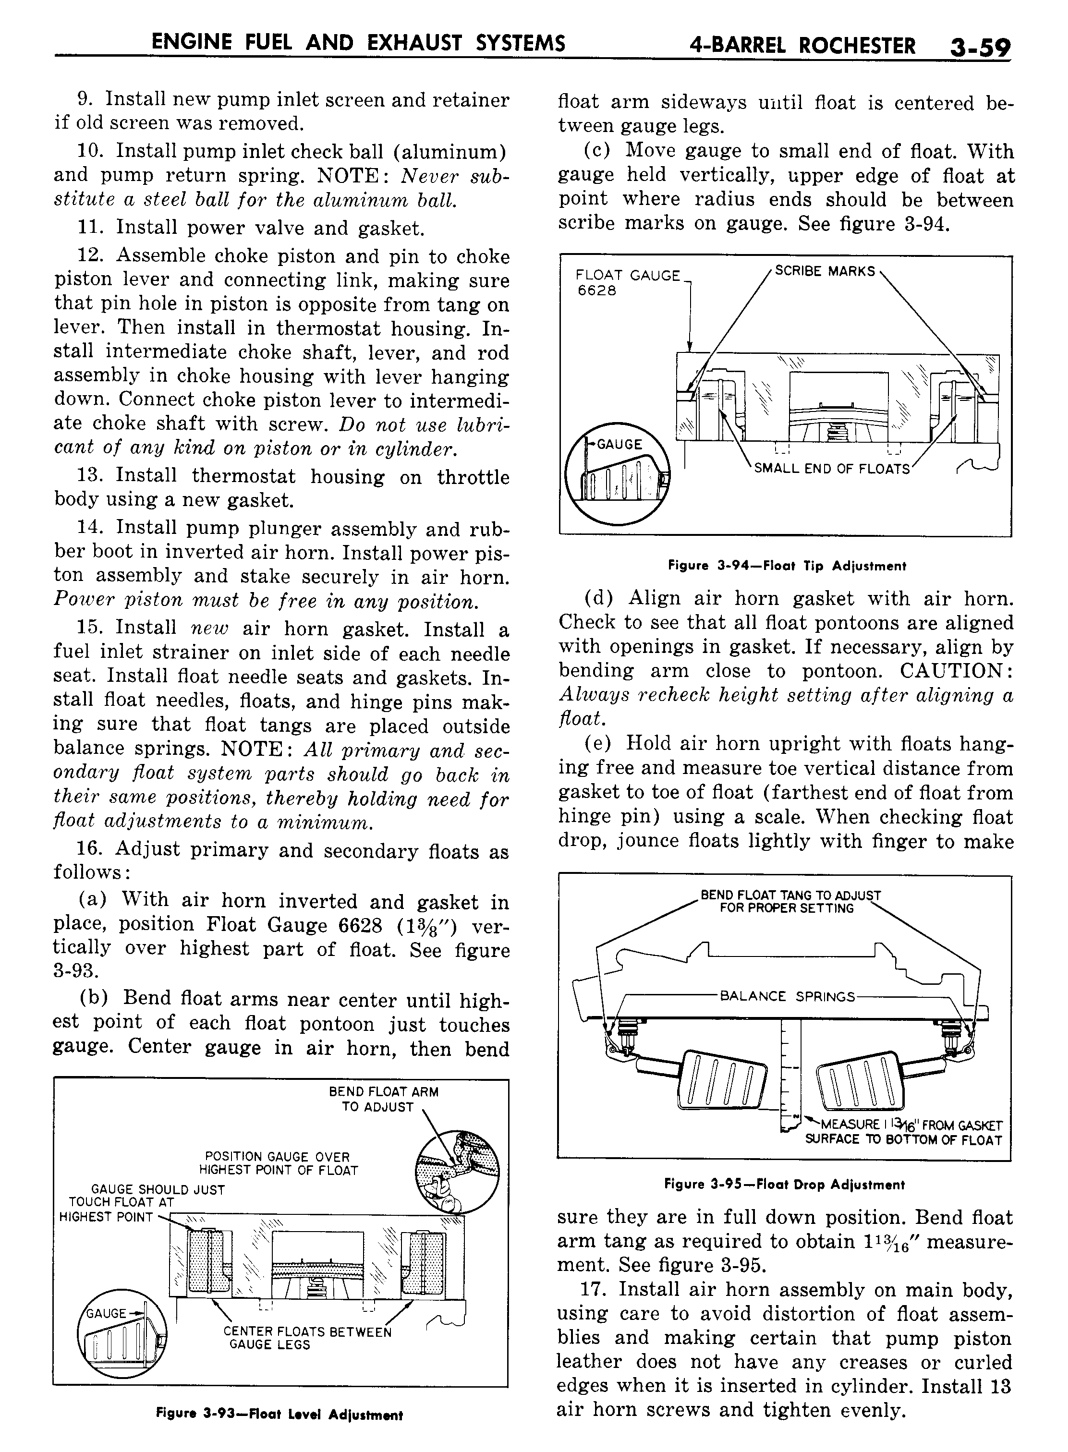 n_04 1957 Buick Shop Manual - Engine Fuel & Exhaust-059-059.jpg